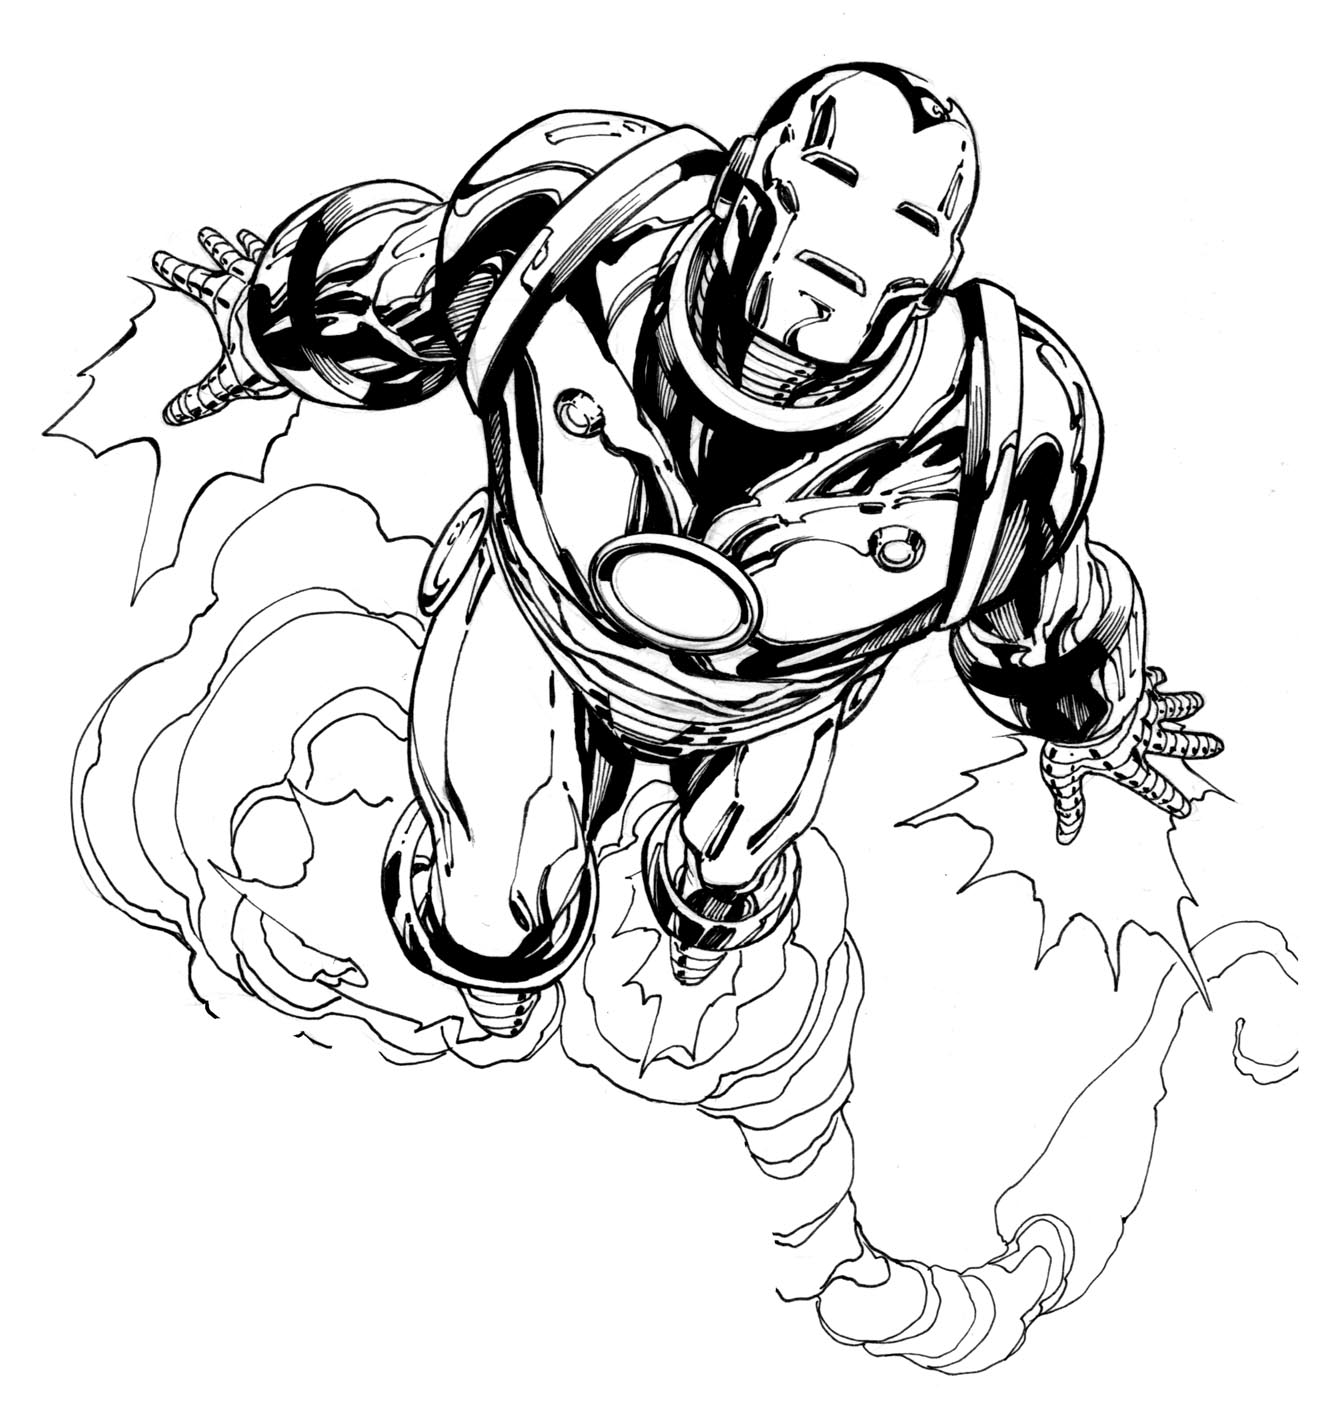 Tony Stark  Iron Man 3 by kleinmeli on deviantART  Marvel art drawings  Tony stark Avengers drawings